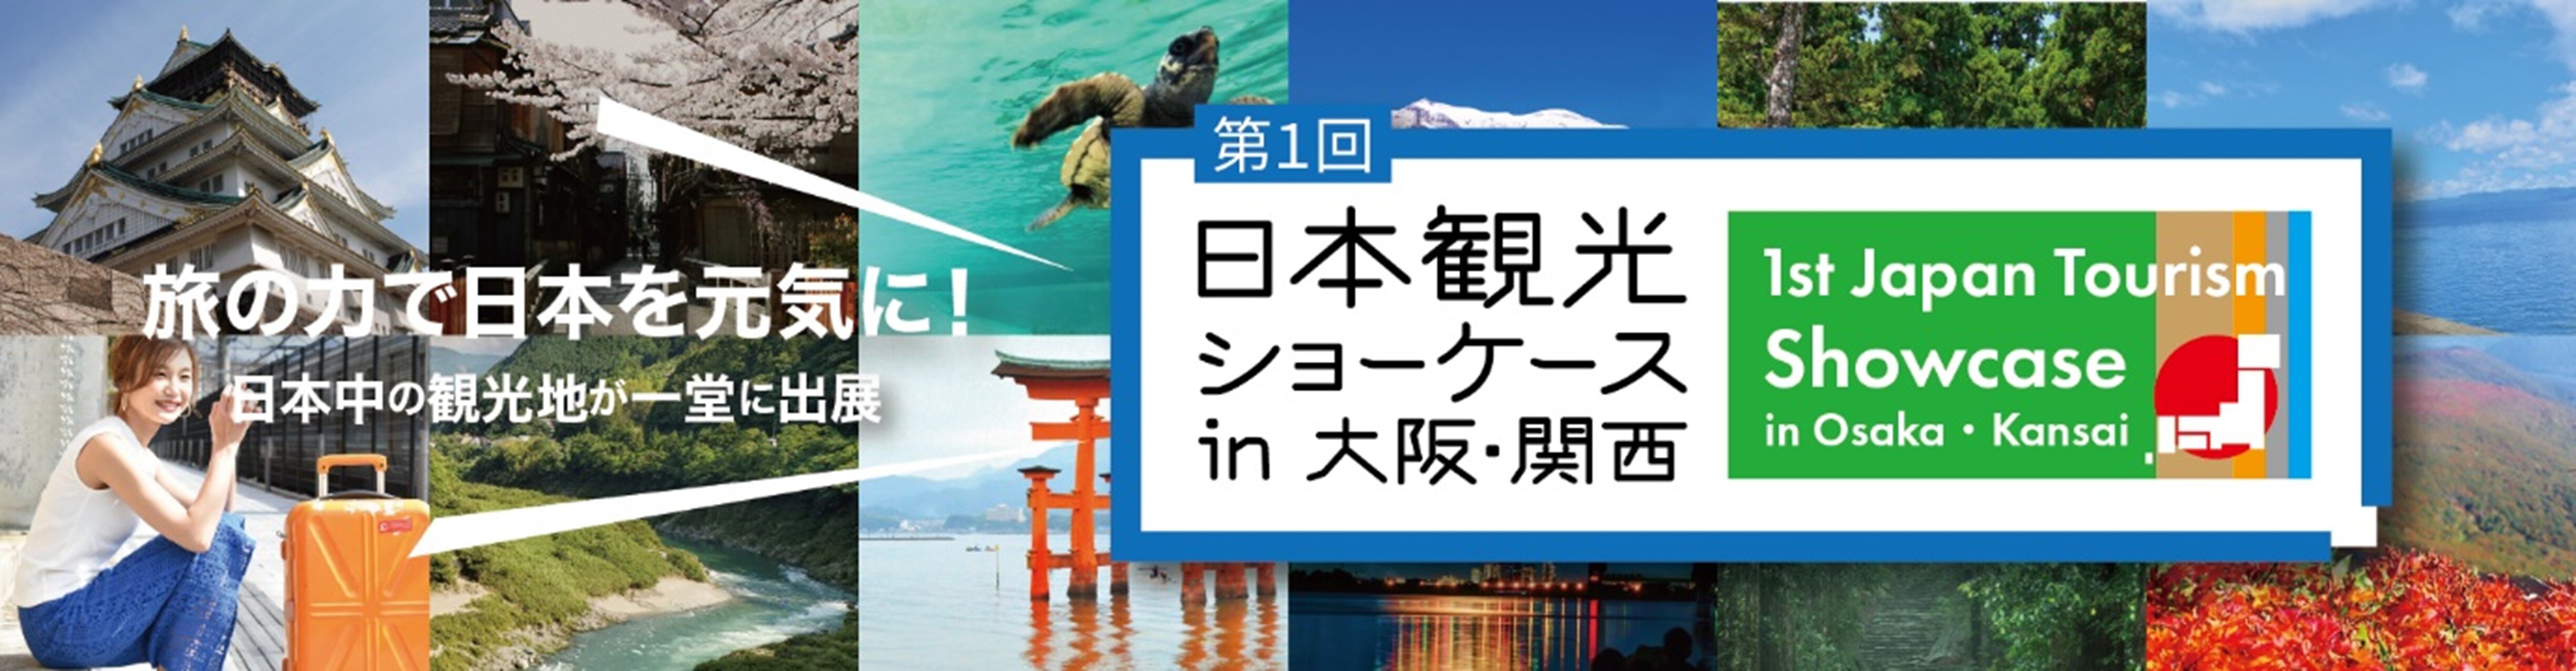 1st_japan_tourism_showcase_banner.jpg